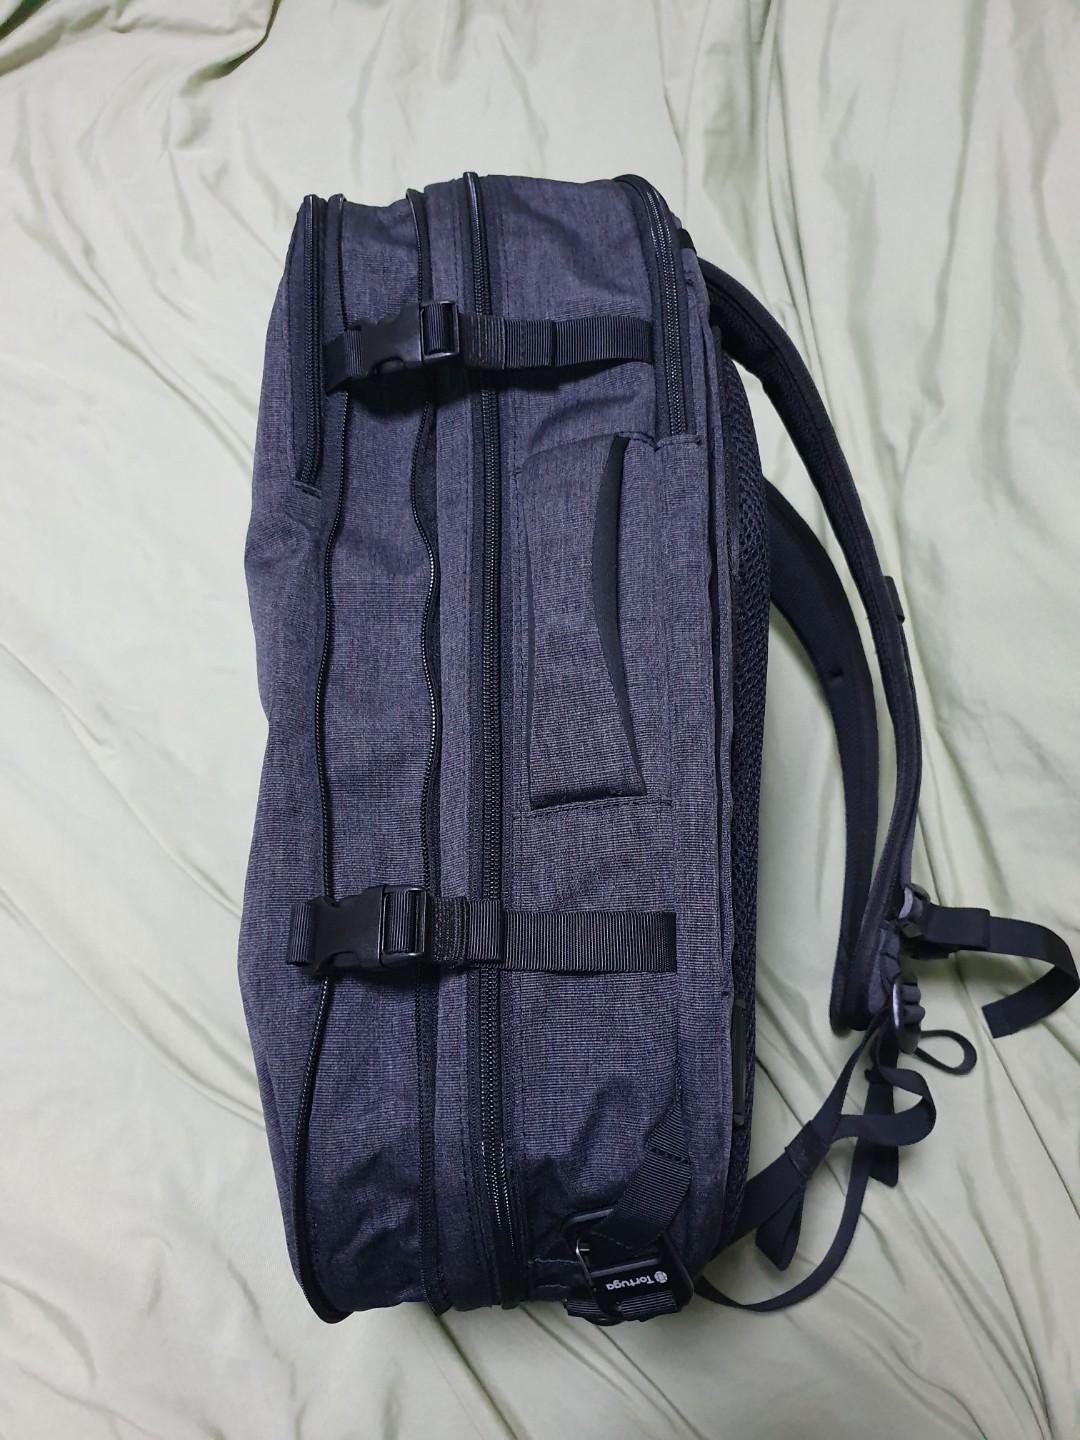 Tortuga Setout Divide Backpack Expandable Carry-On Travel Bag 26L - 34L ...